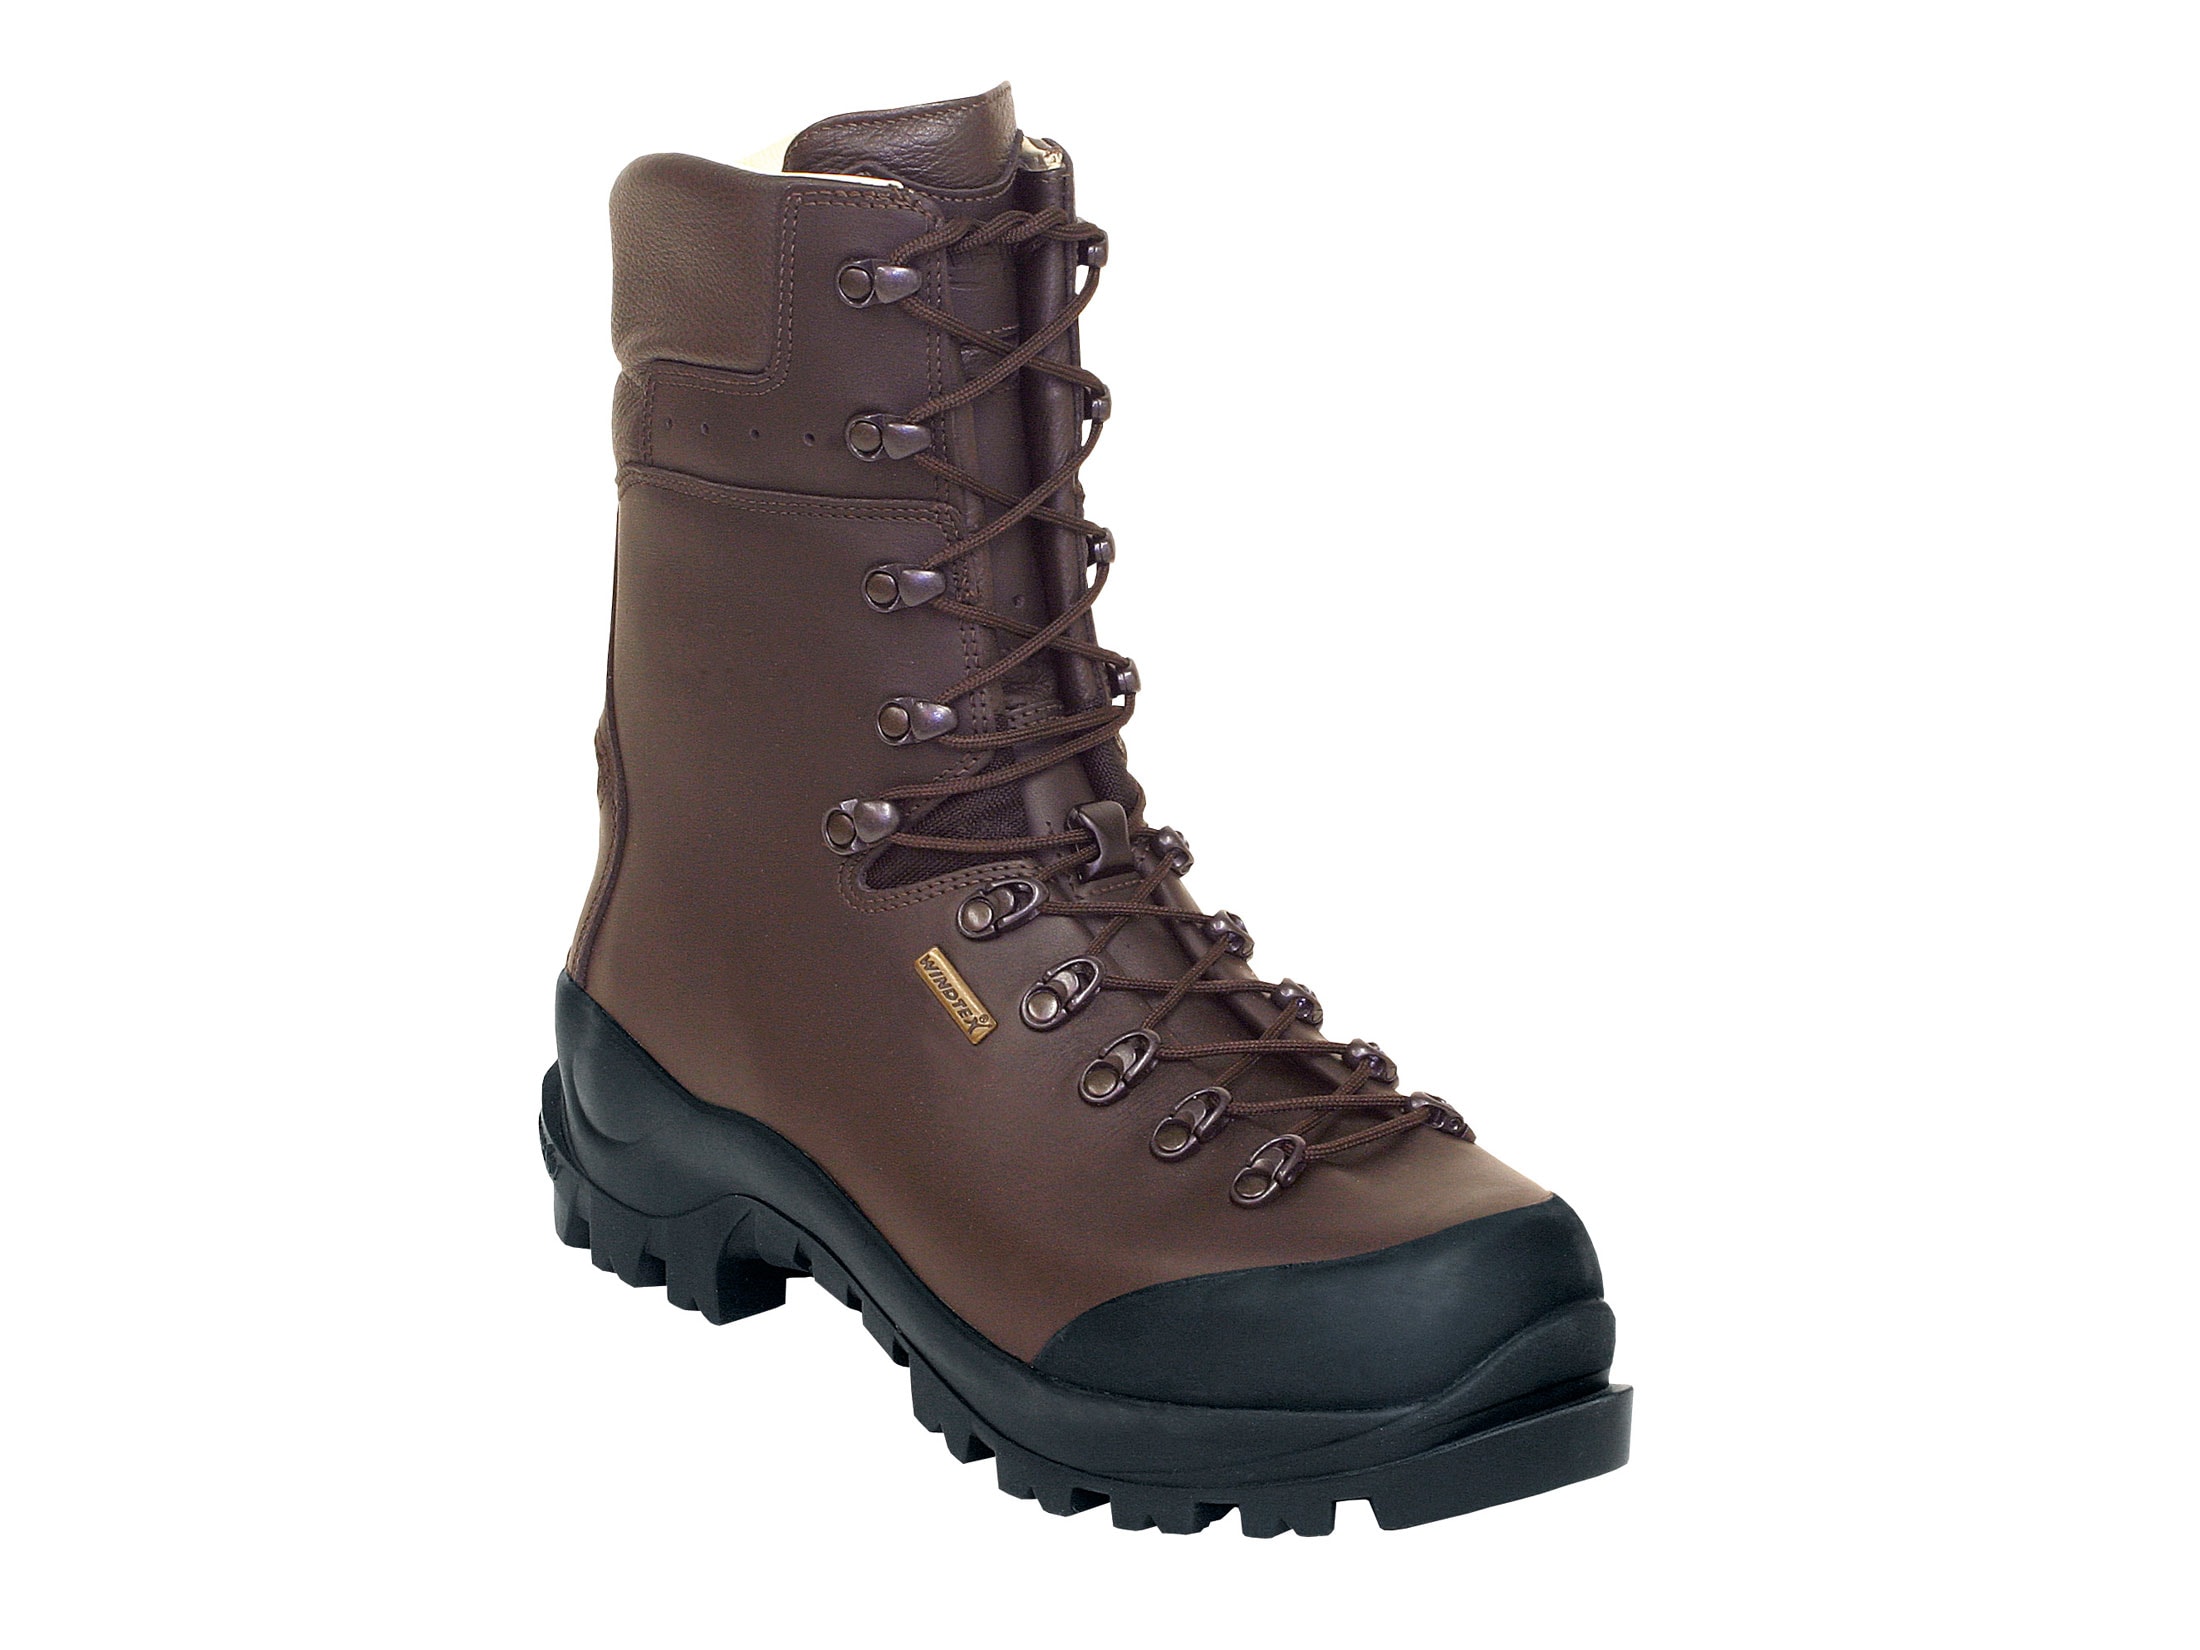 Kenetrek Mountain Guide 10 Waterproof 400 Gram Insulated Hunting Boots